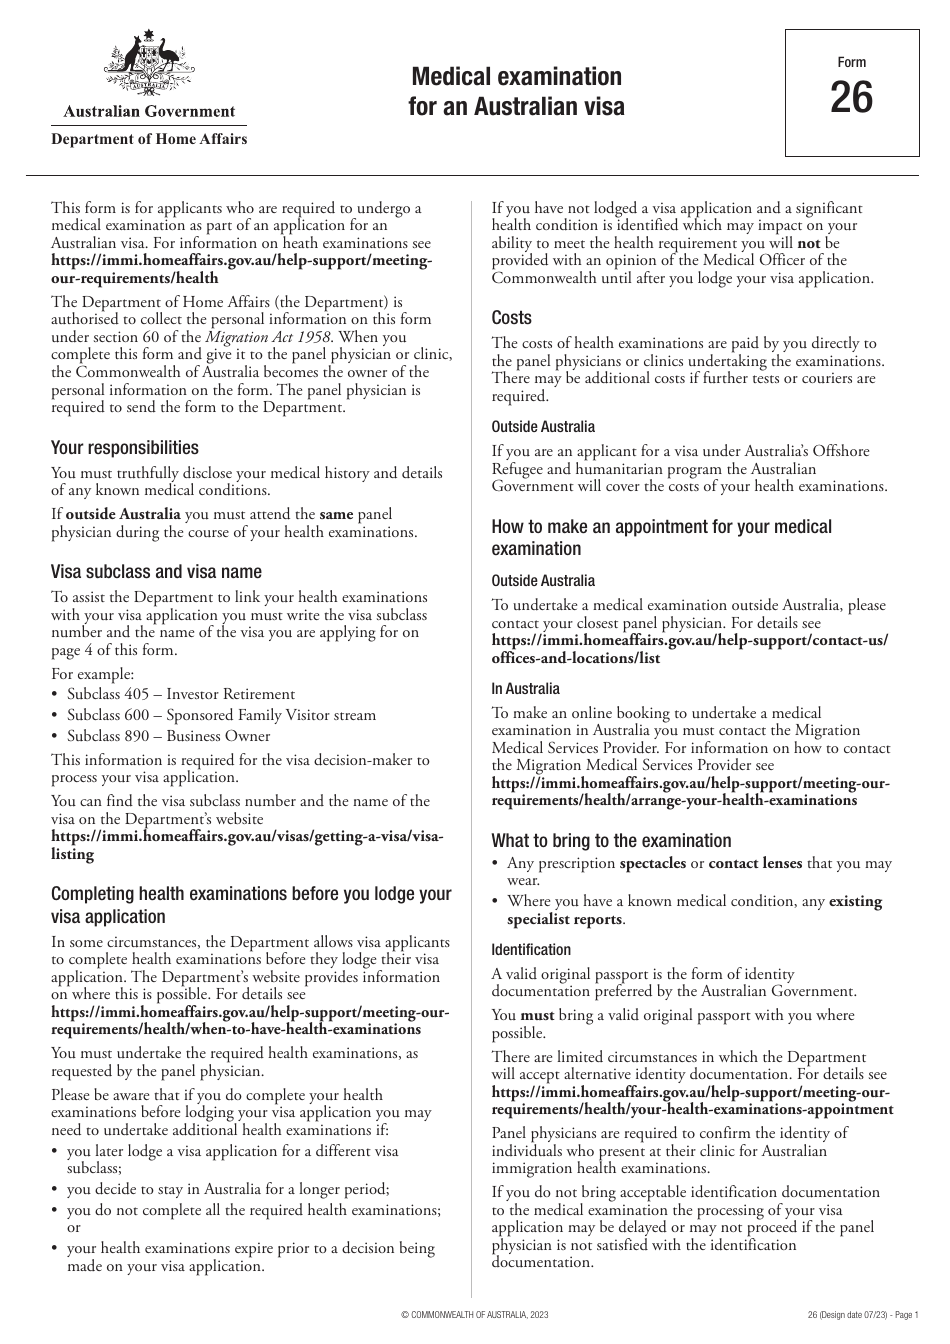 Form 26 Medical Examination for an Australian Visa - Australia, Page 1